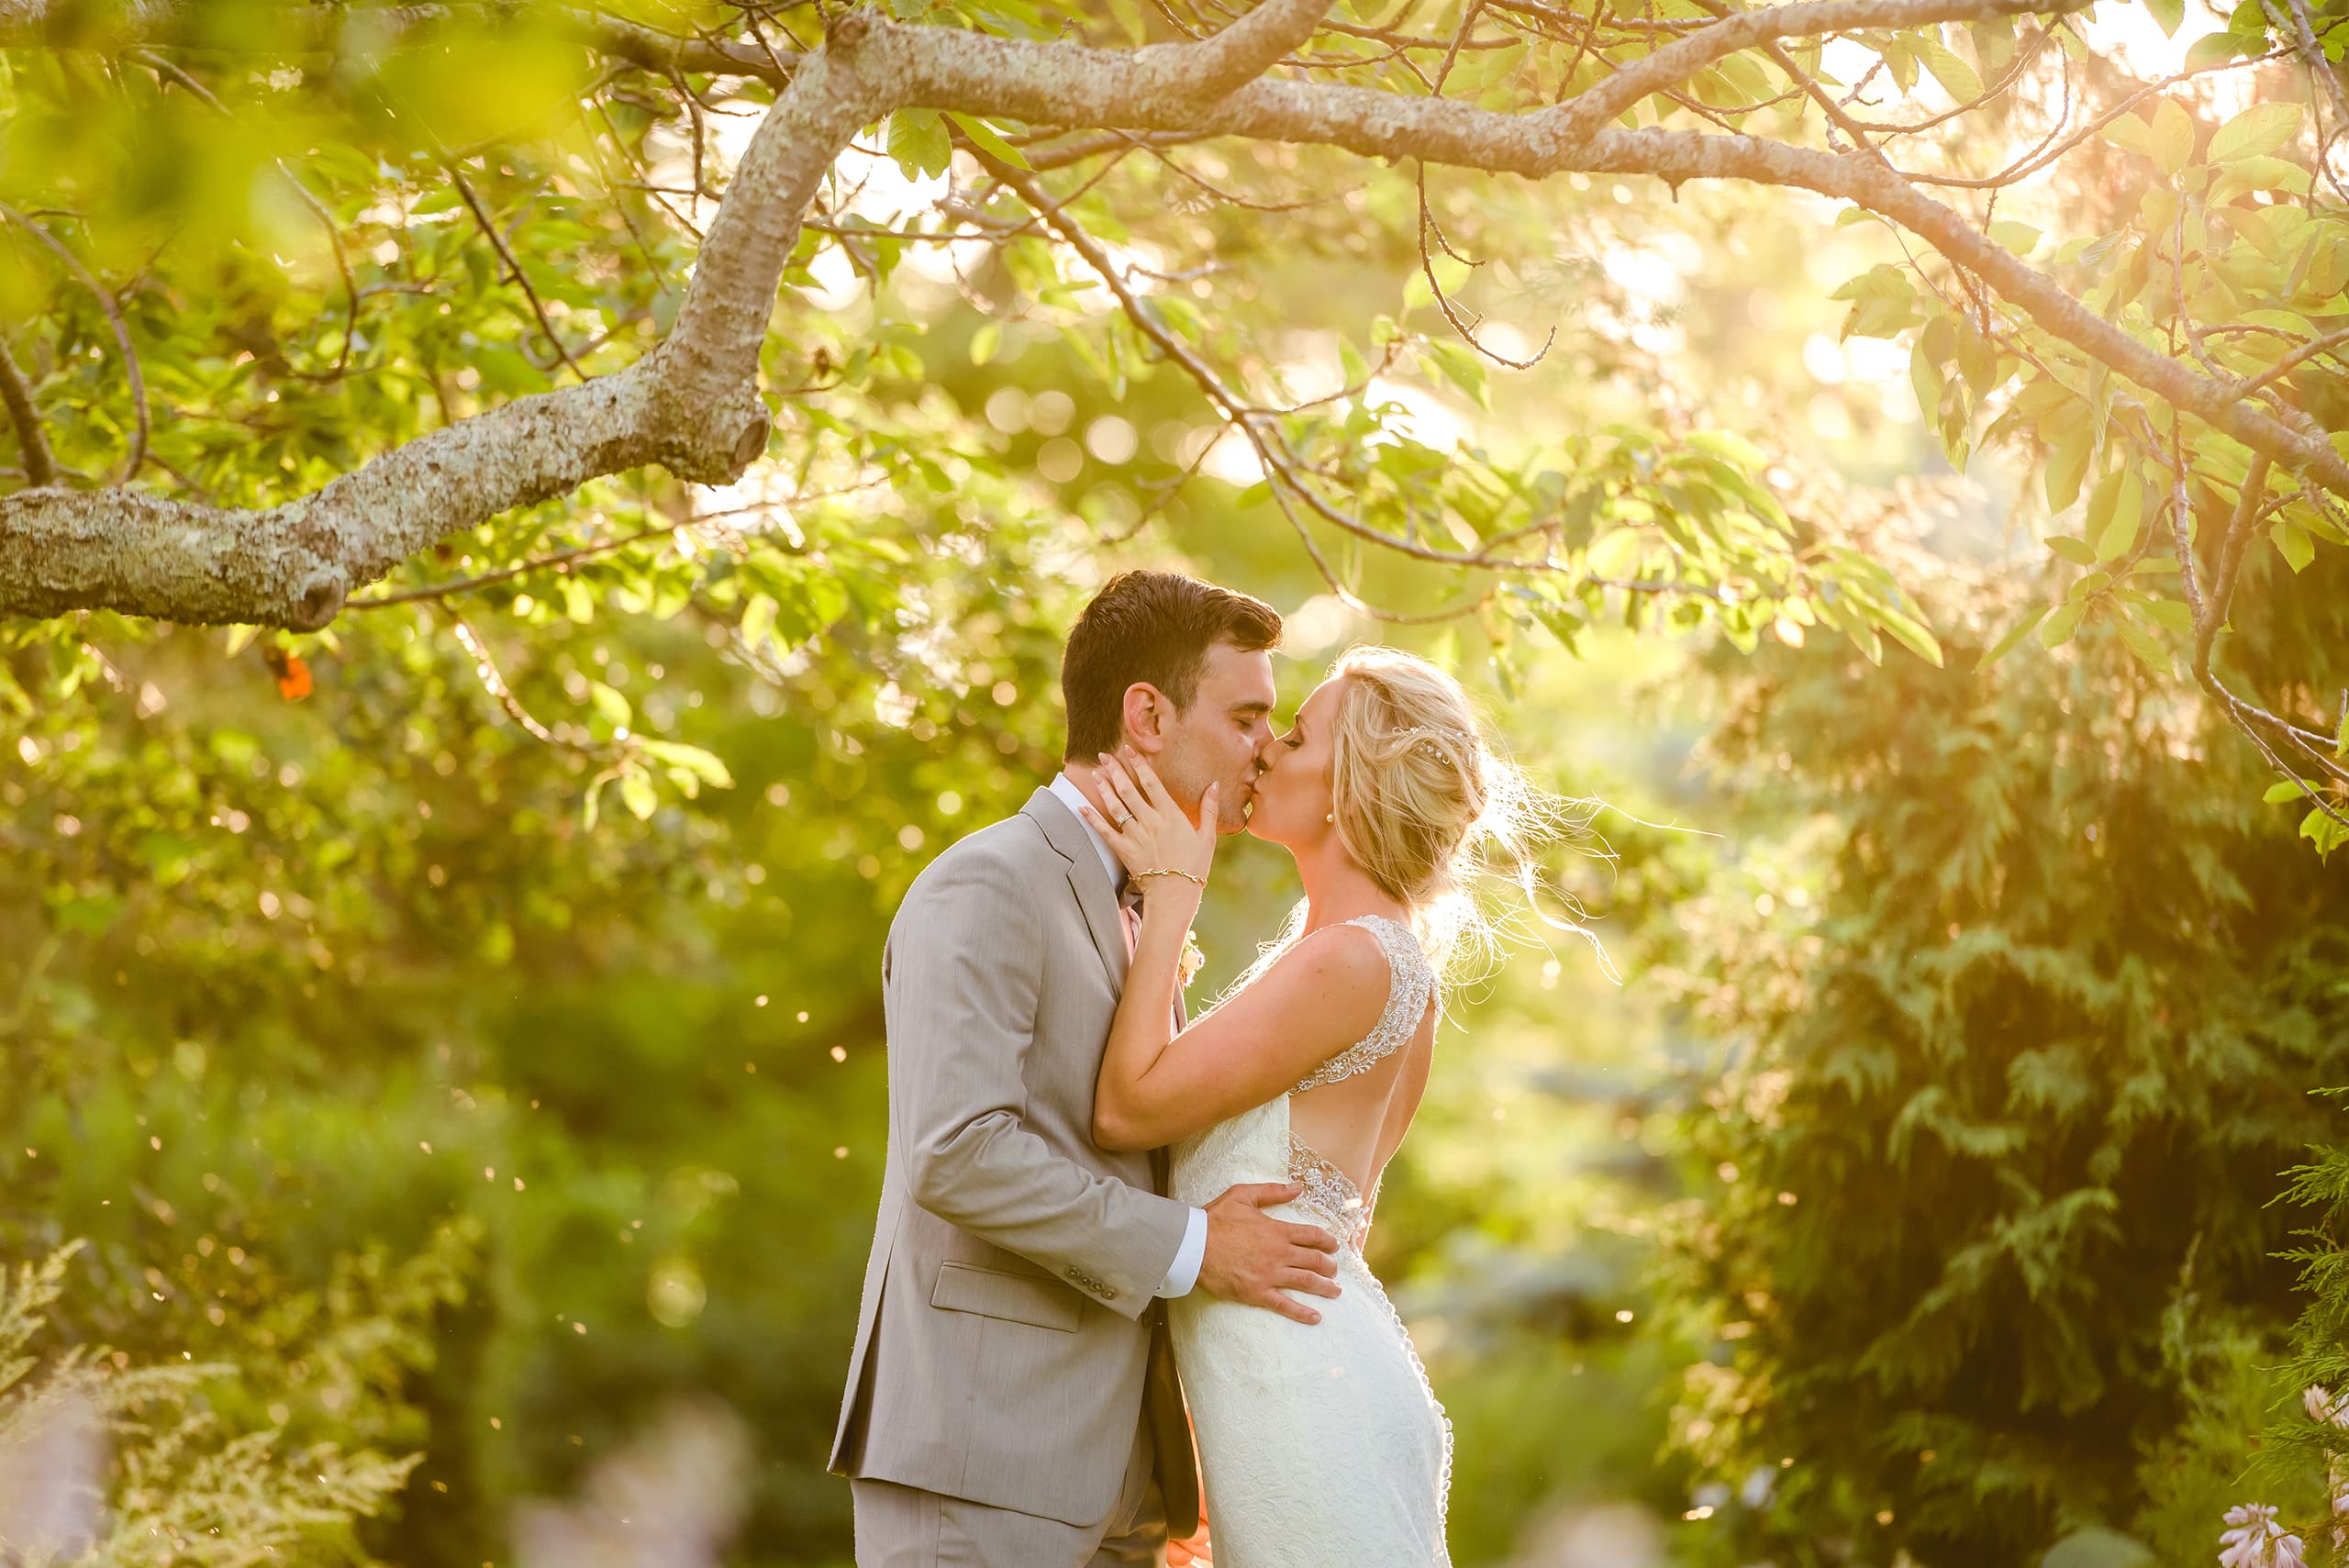 Leigha & Scott - Halifax wedding at Tangled Garden